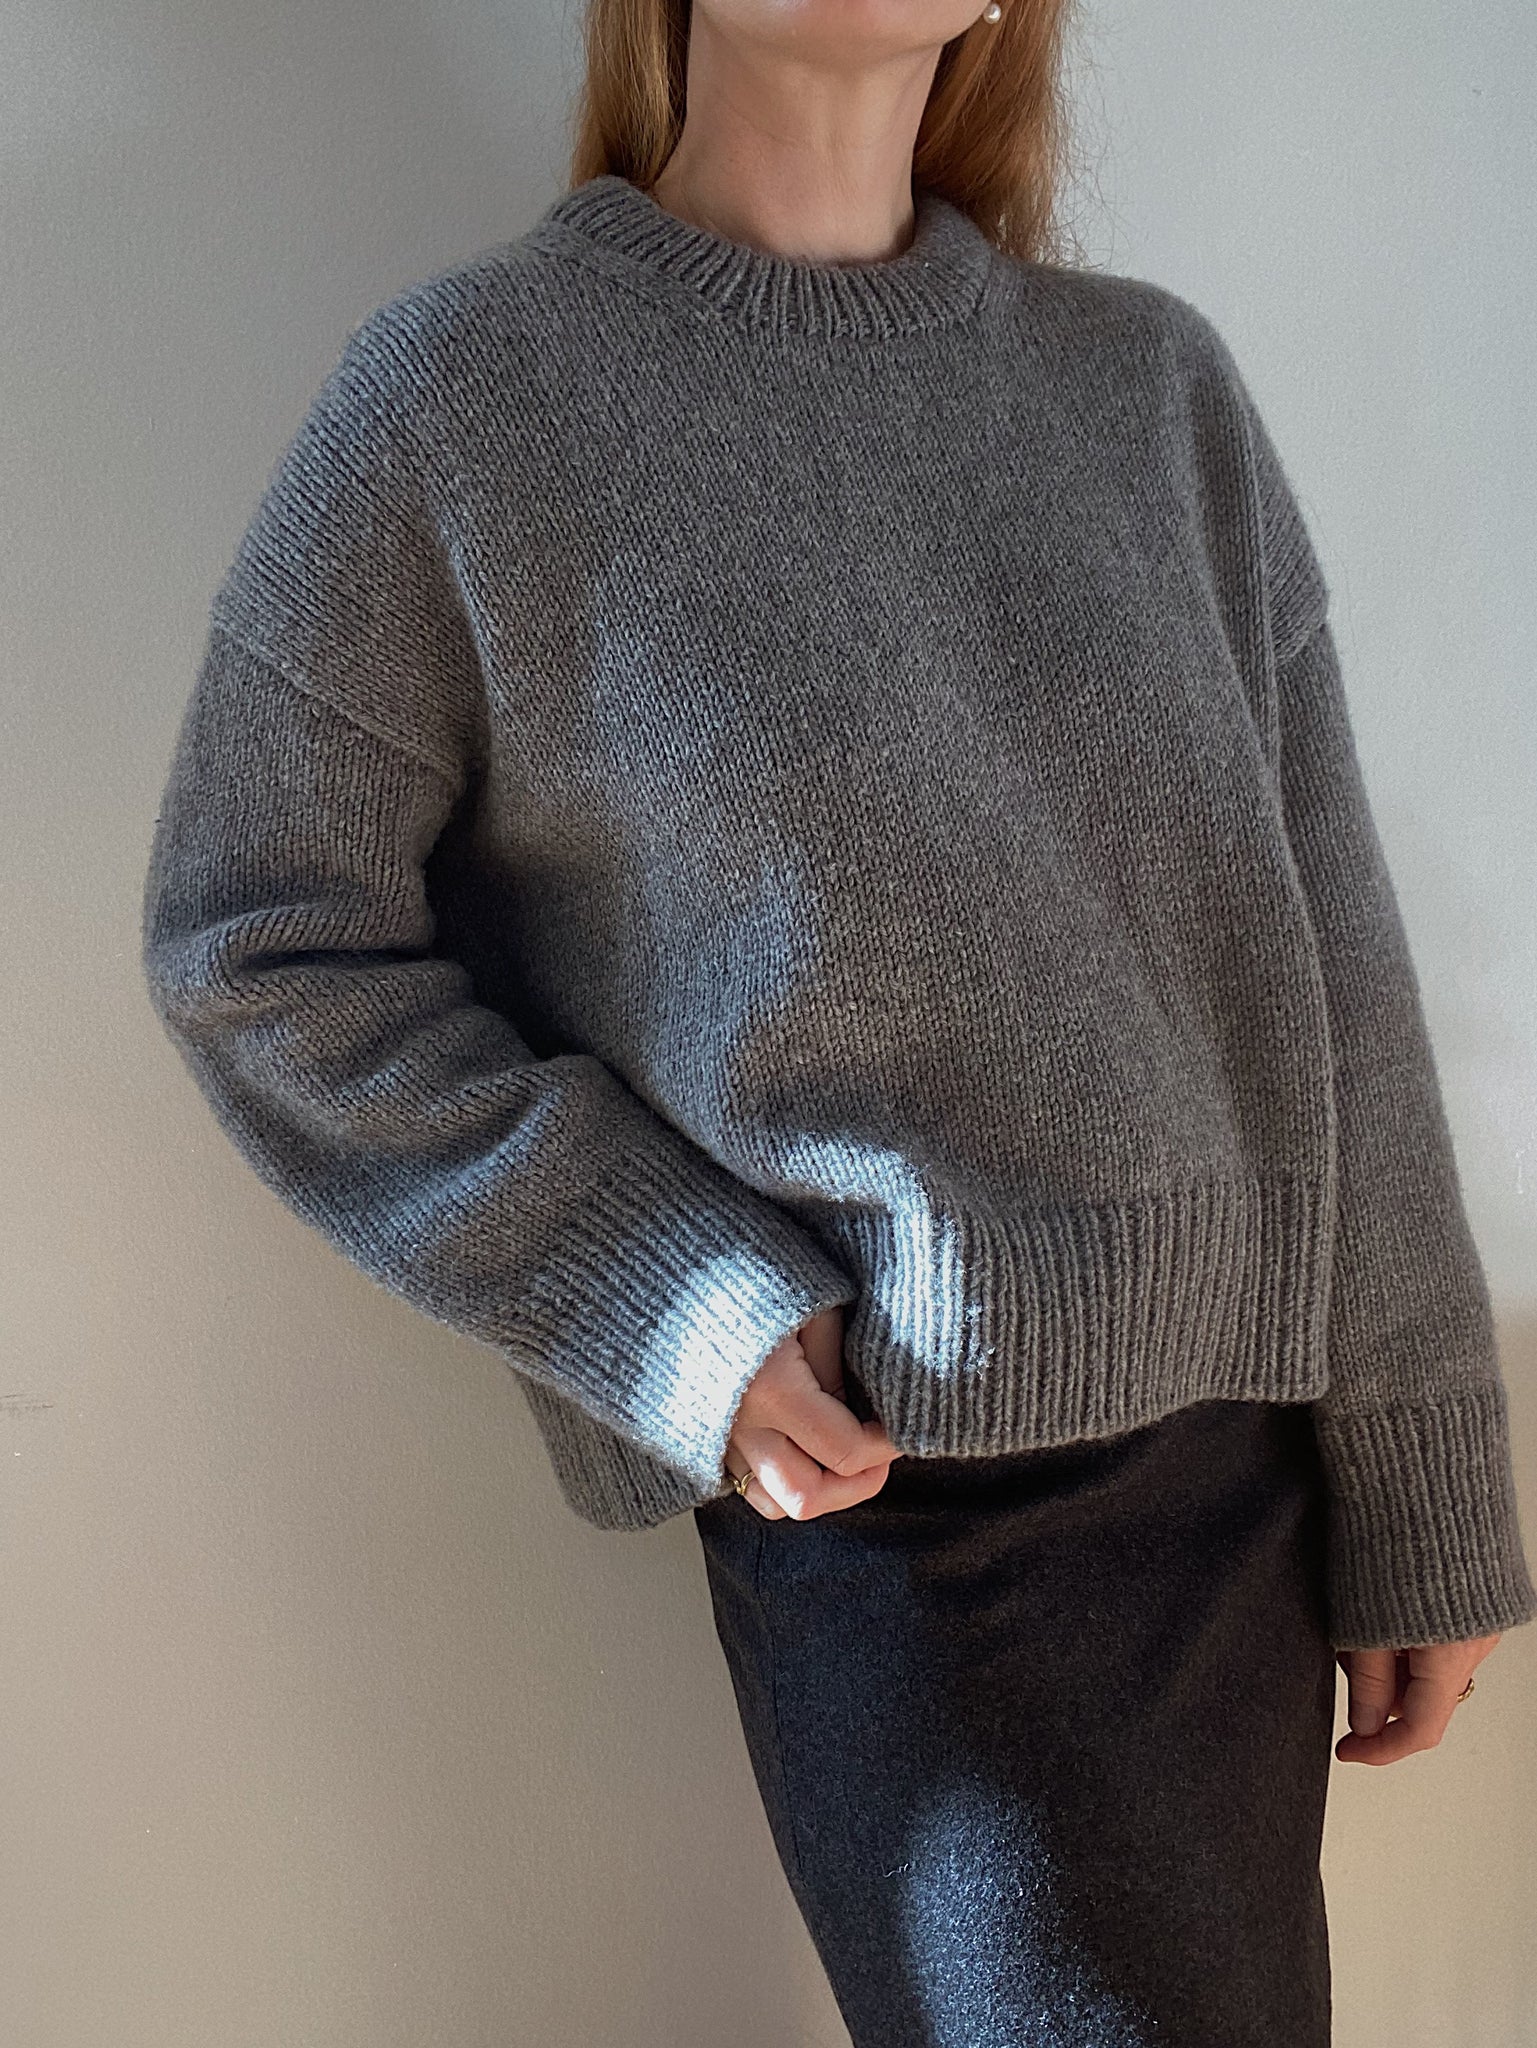 Sweater No. 23 - Knitting Pattern in English – • MY FAVOURITE 